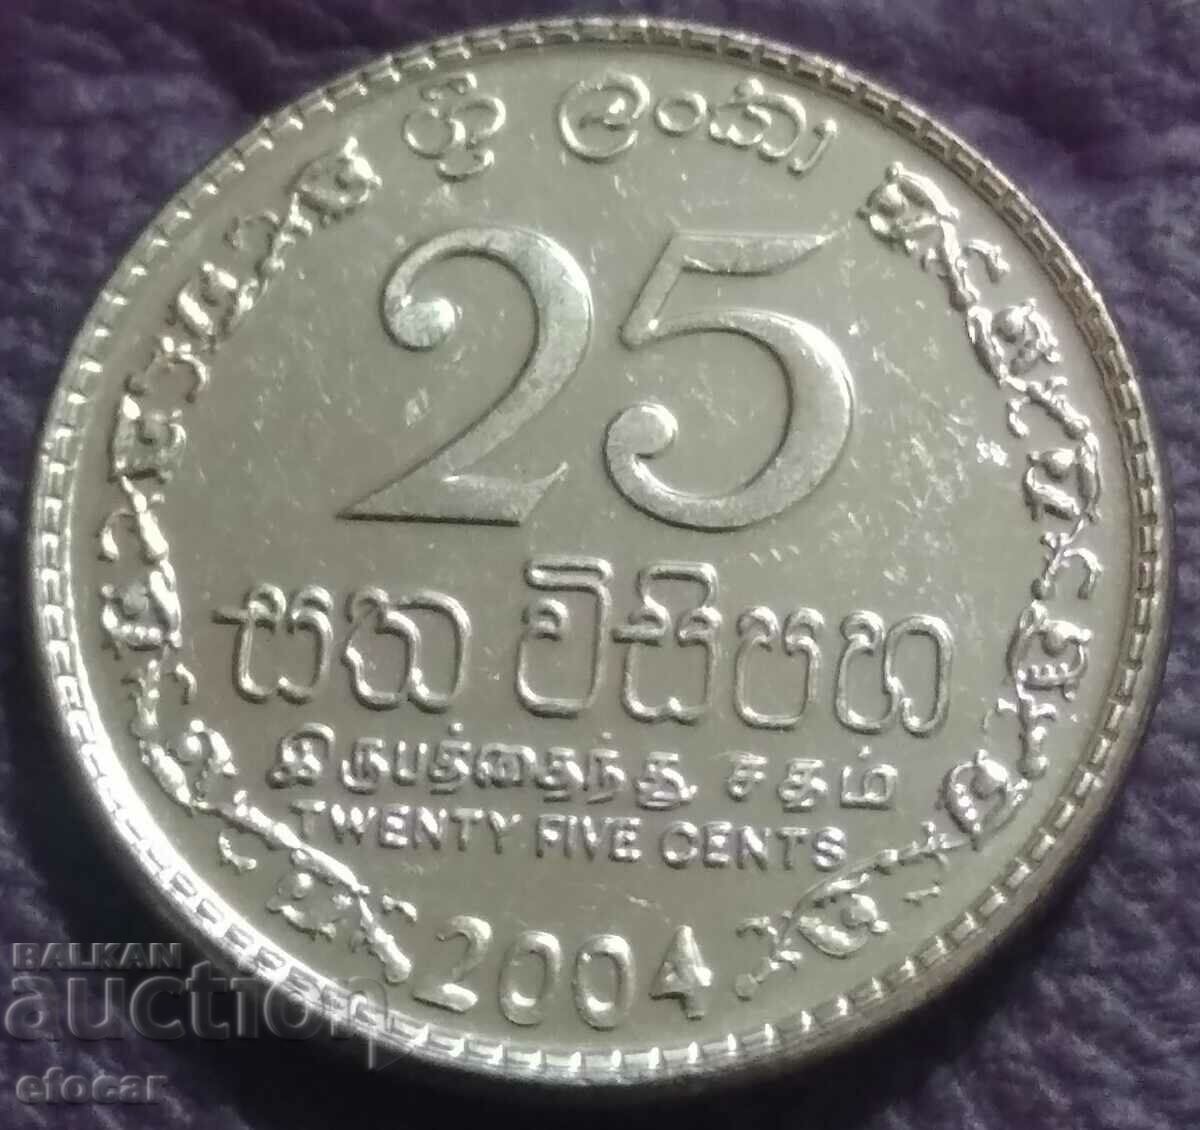 25 cents Sri Lanka 2004